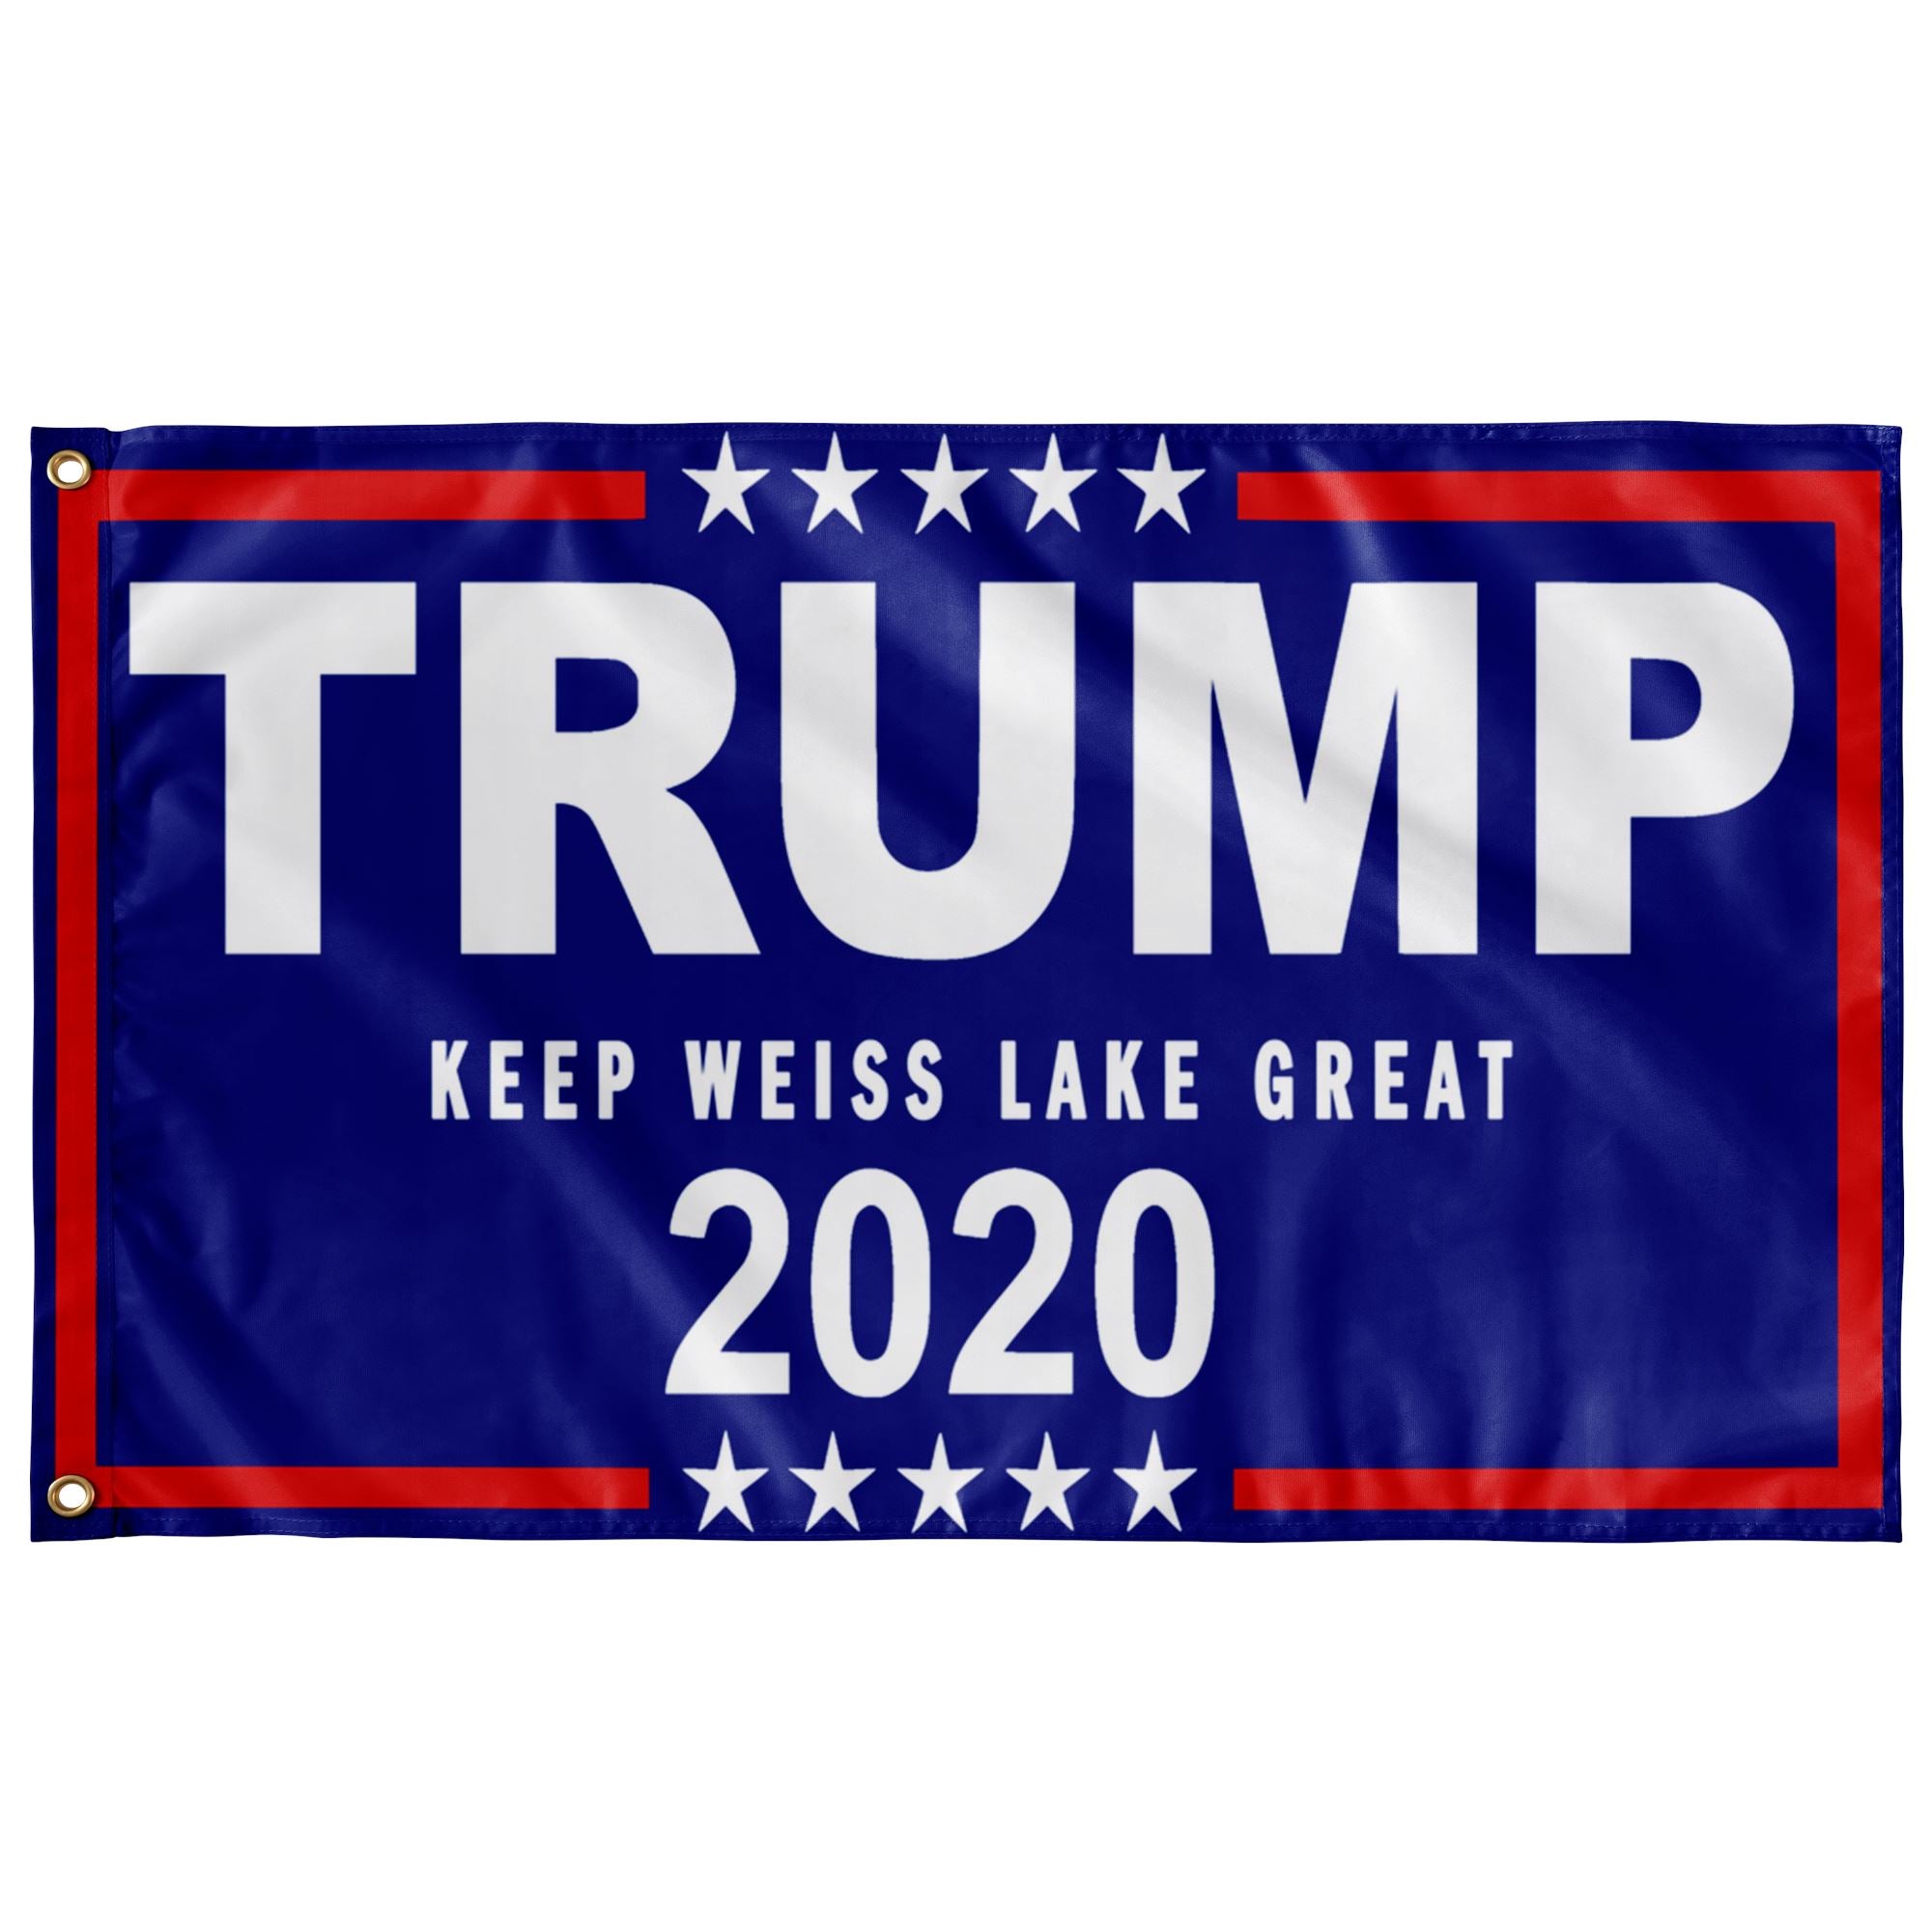 Trump Boat Flags - Keep Weiss Lake Great - Houseboat Kings